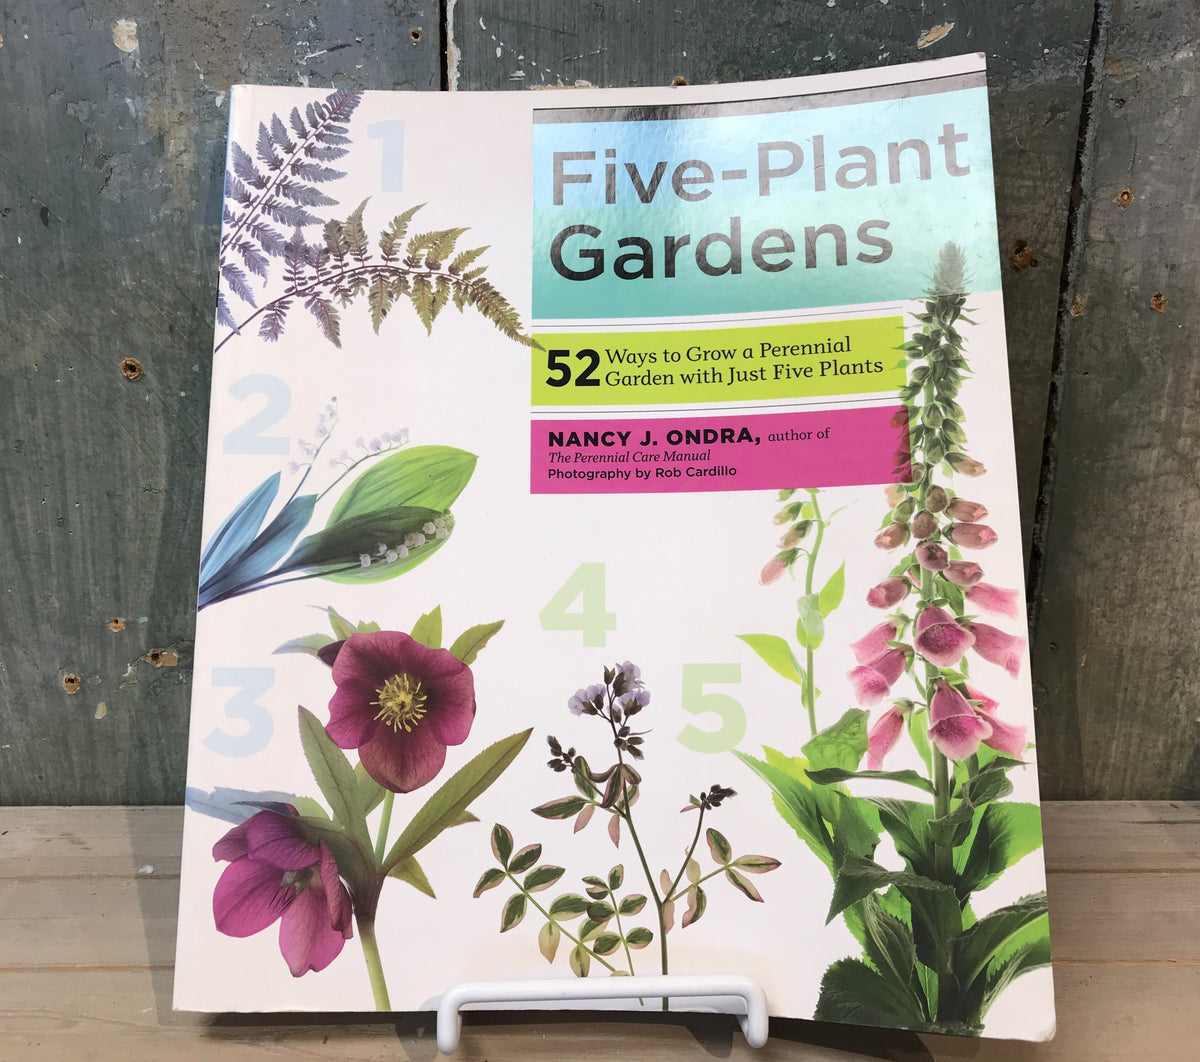 Five-Plant Gardens